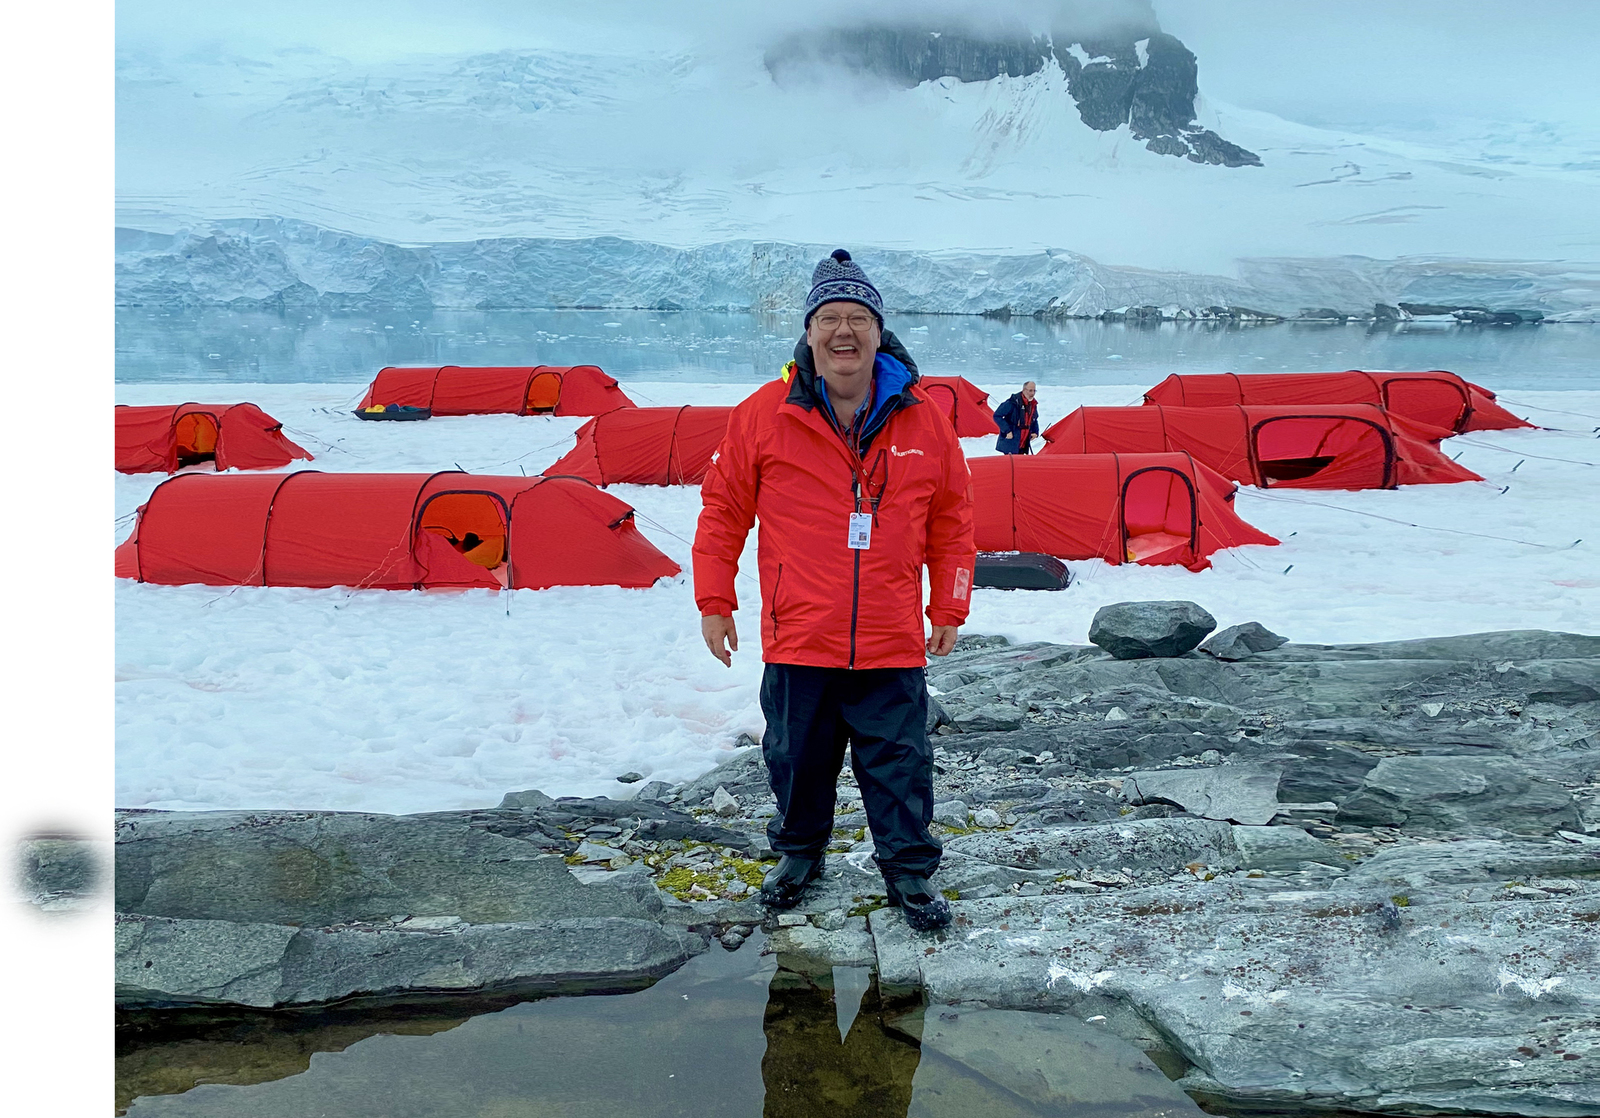 Camping on Antarctica